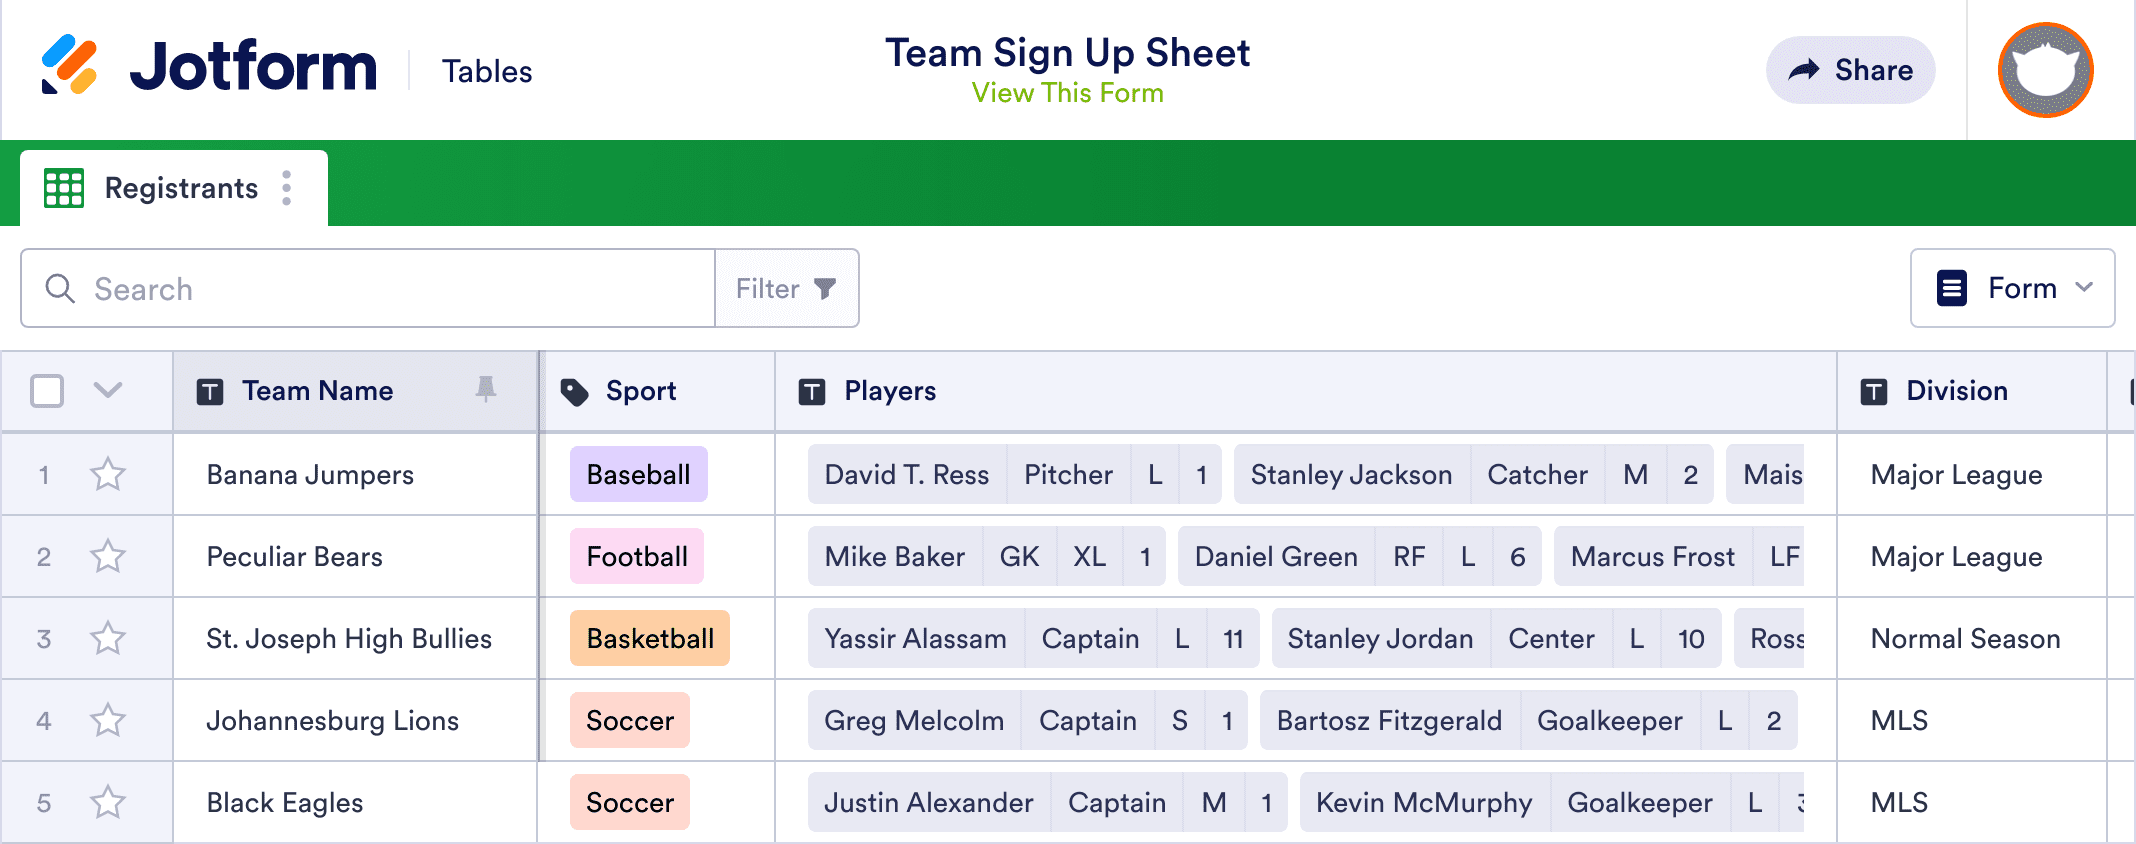 Team Sign Up Sheet Template | Jotform Tables